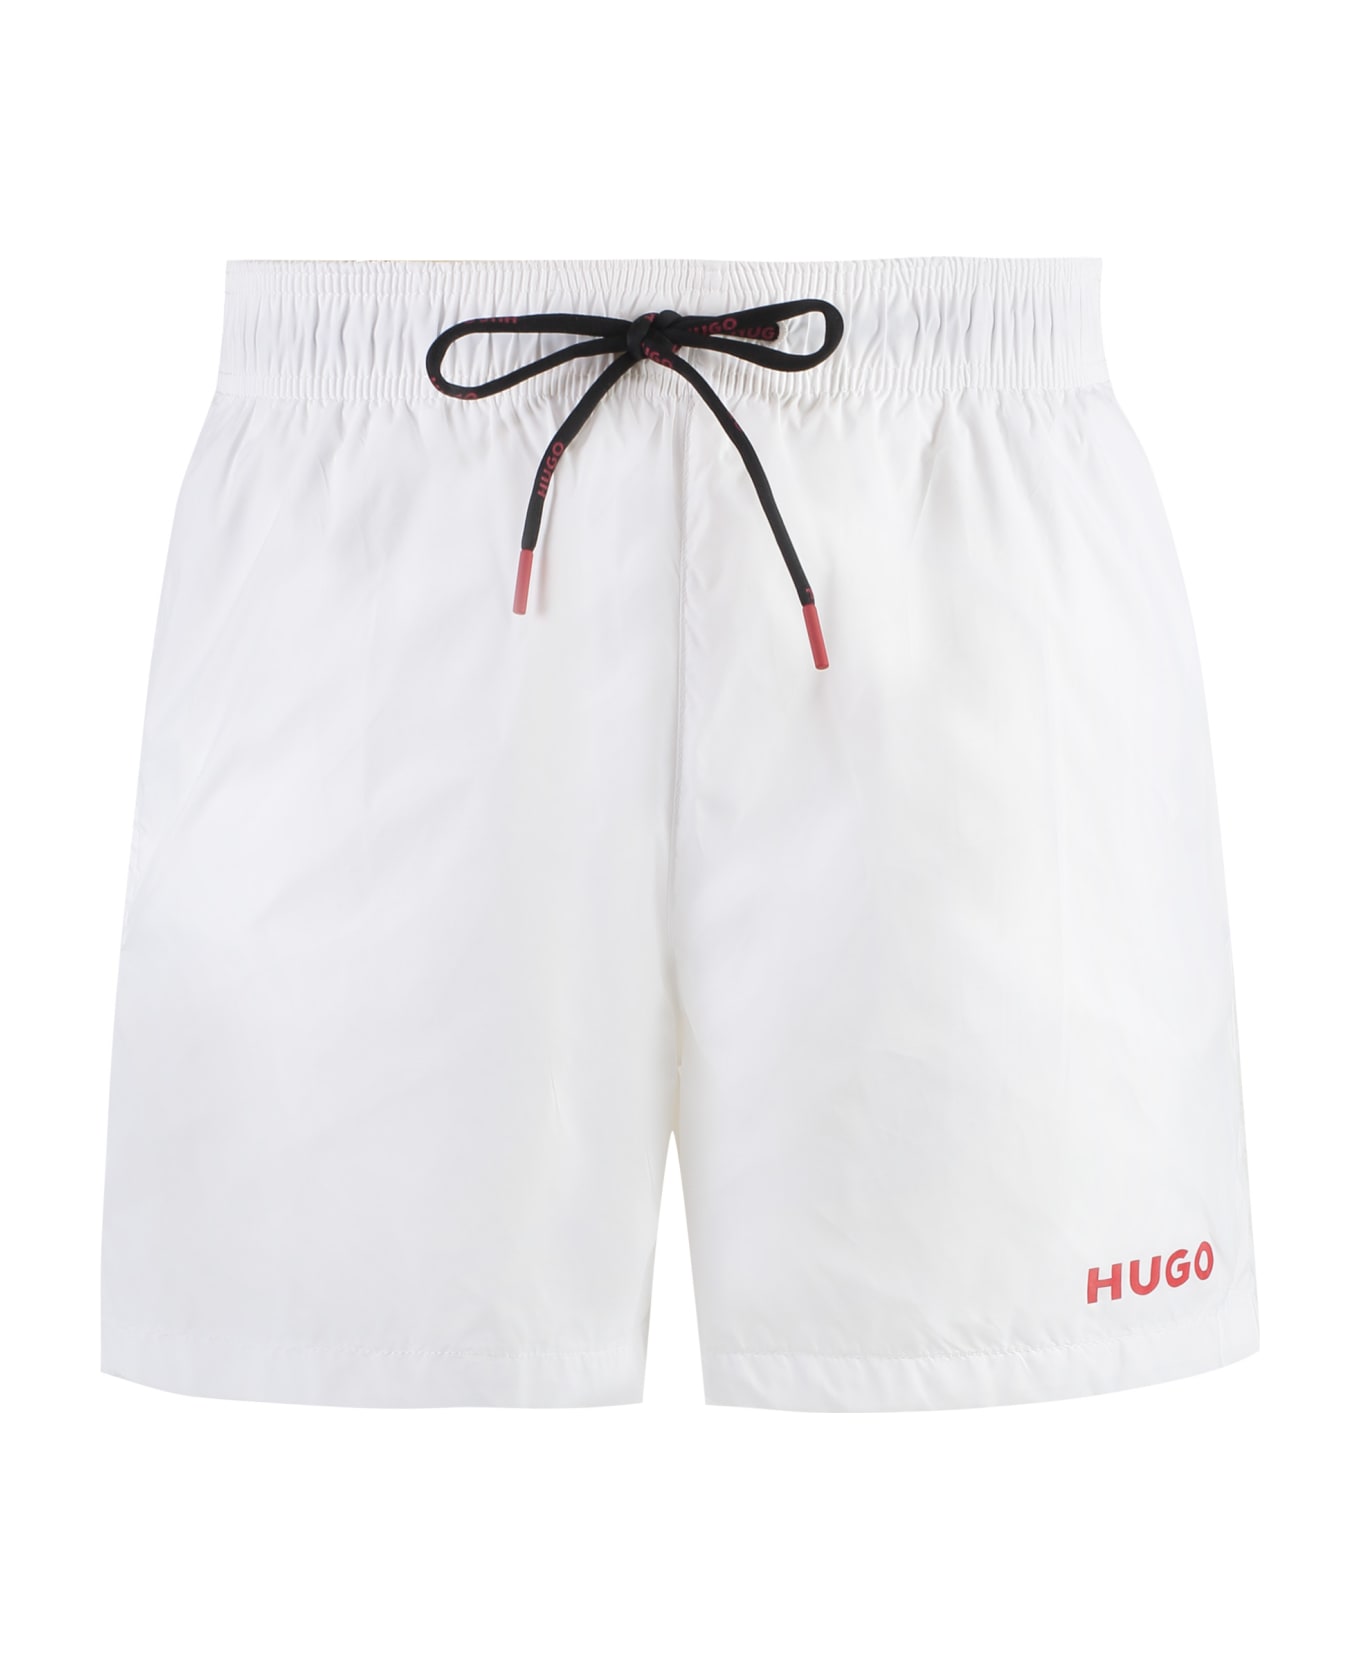 Hugo Boss Nylon Swim Shorts - White